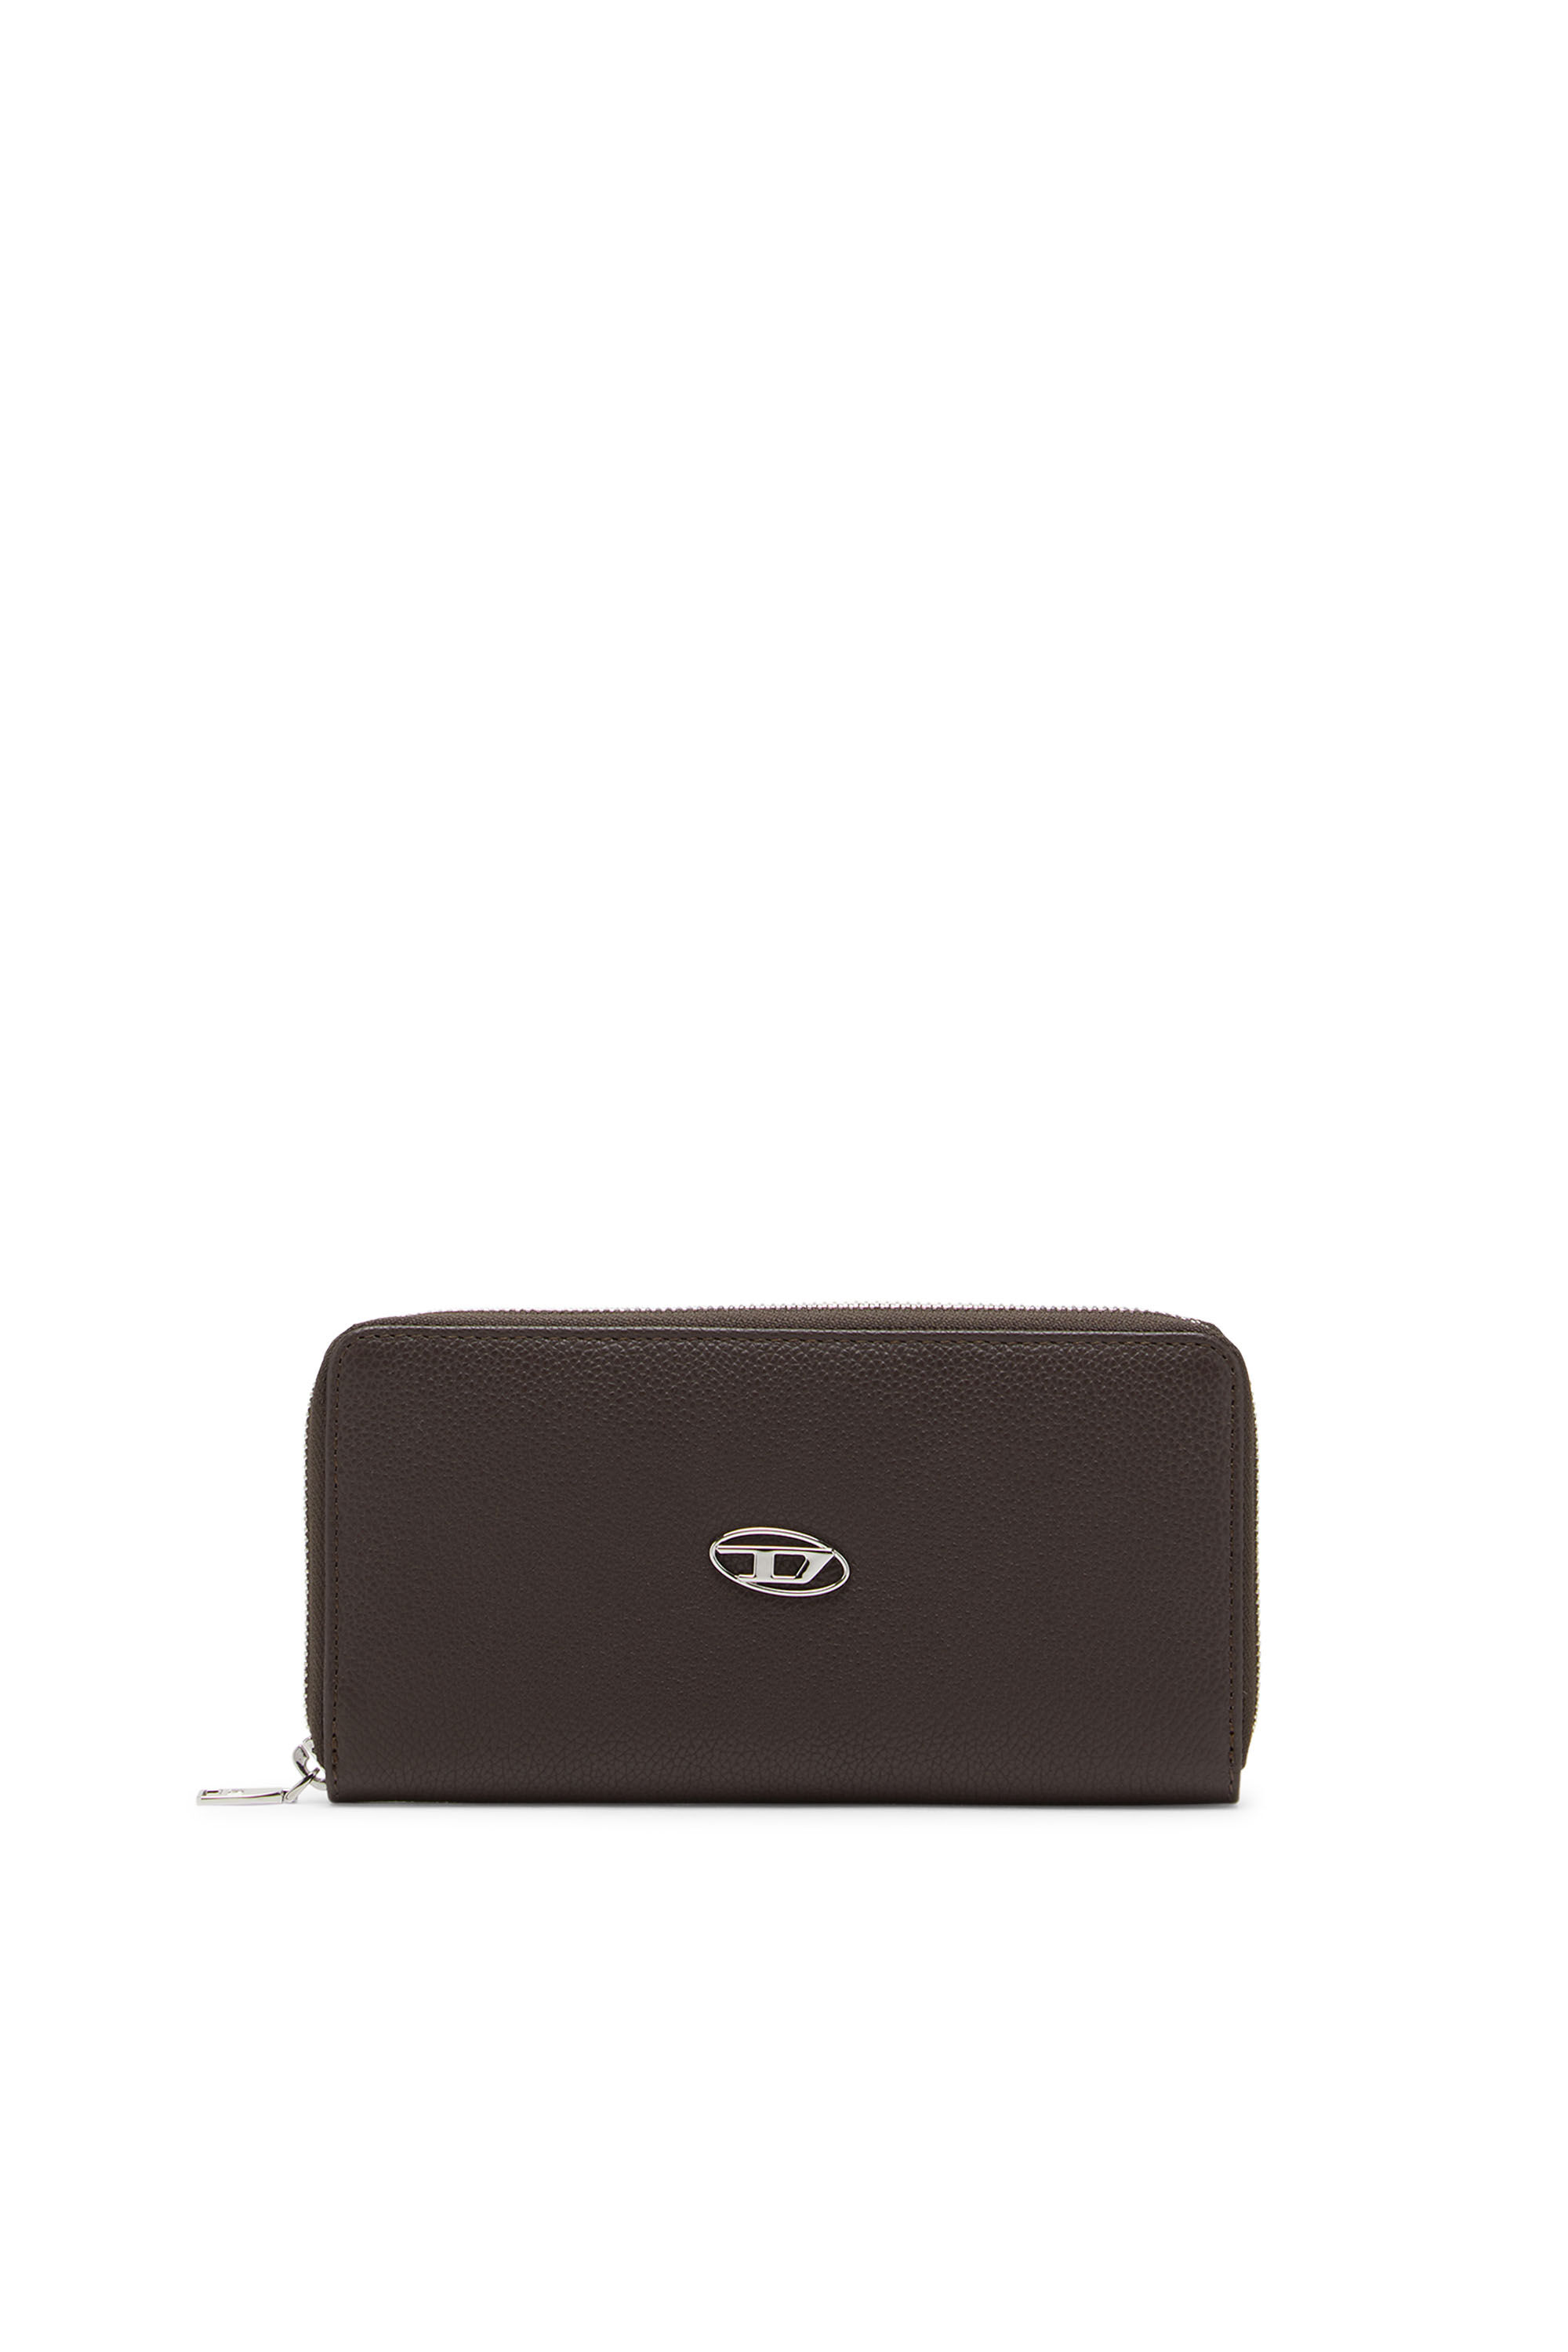 Diesel - CONTINENTAL ZIP L, Man Leather zip-around wallet with logo plaque in Brown - Image 1